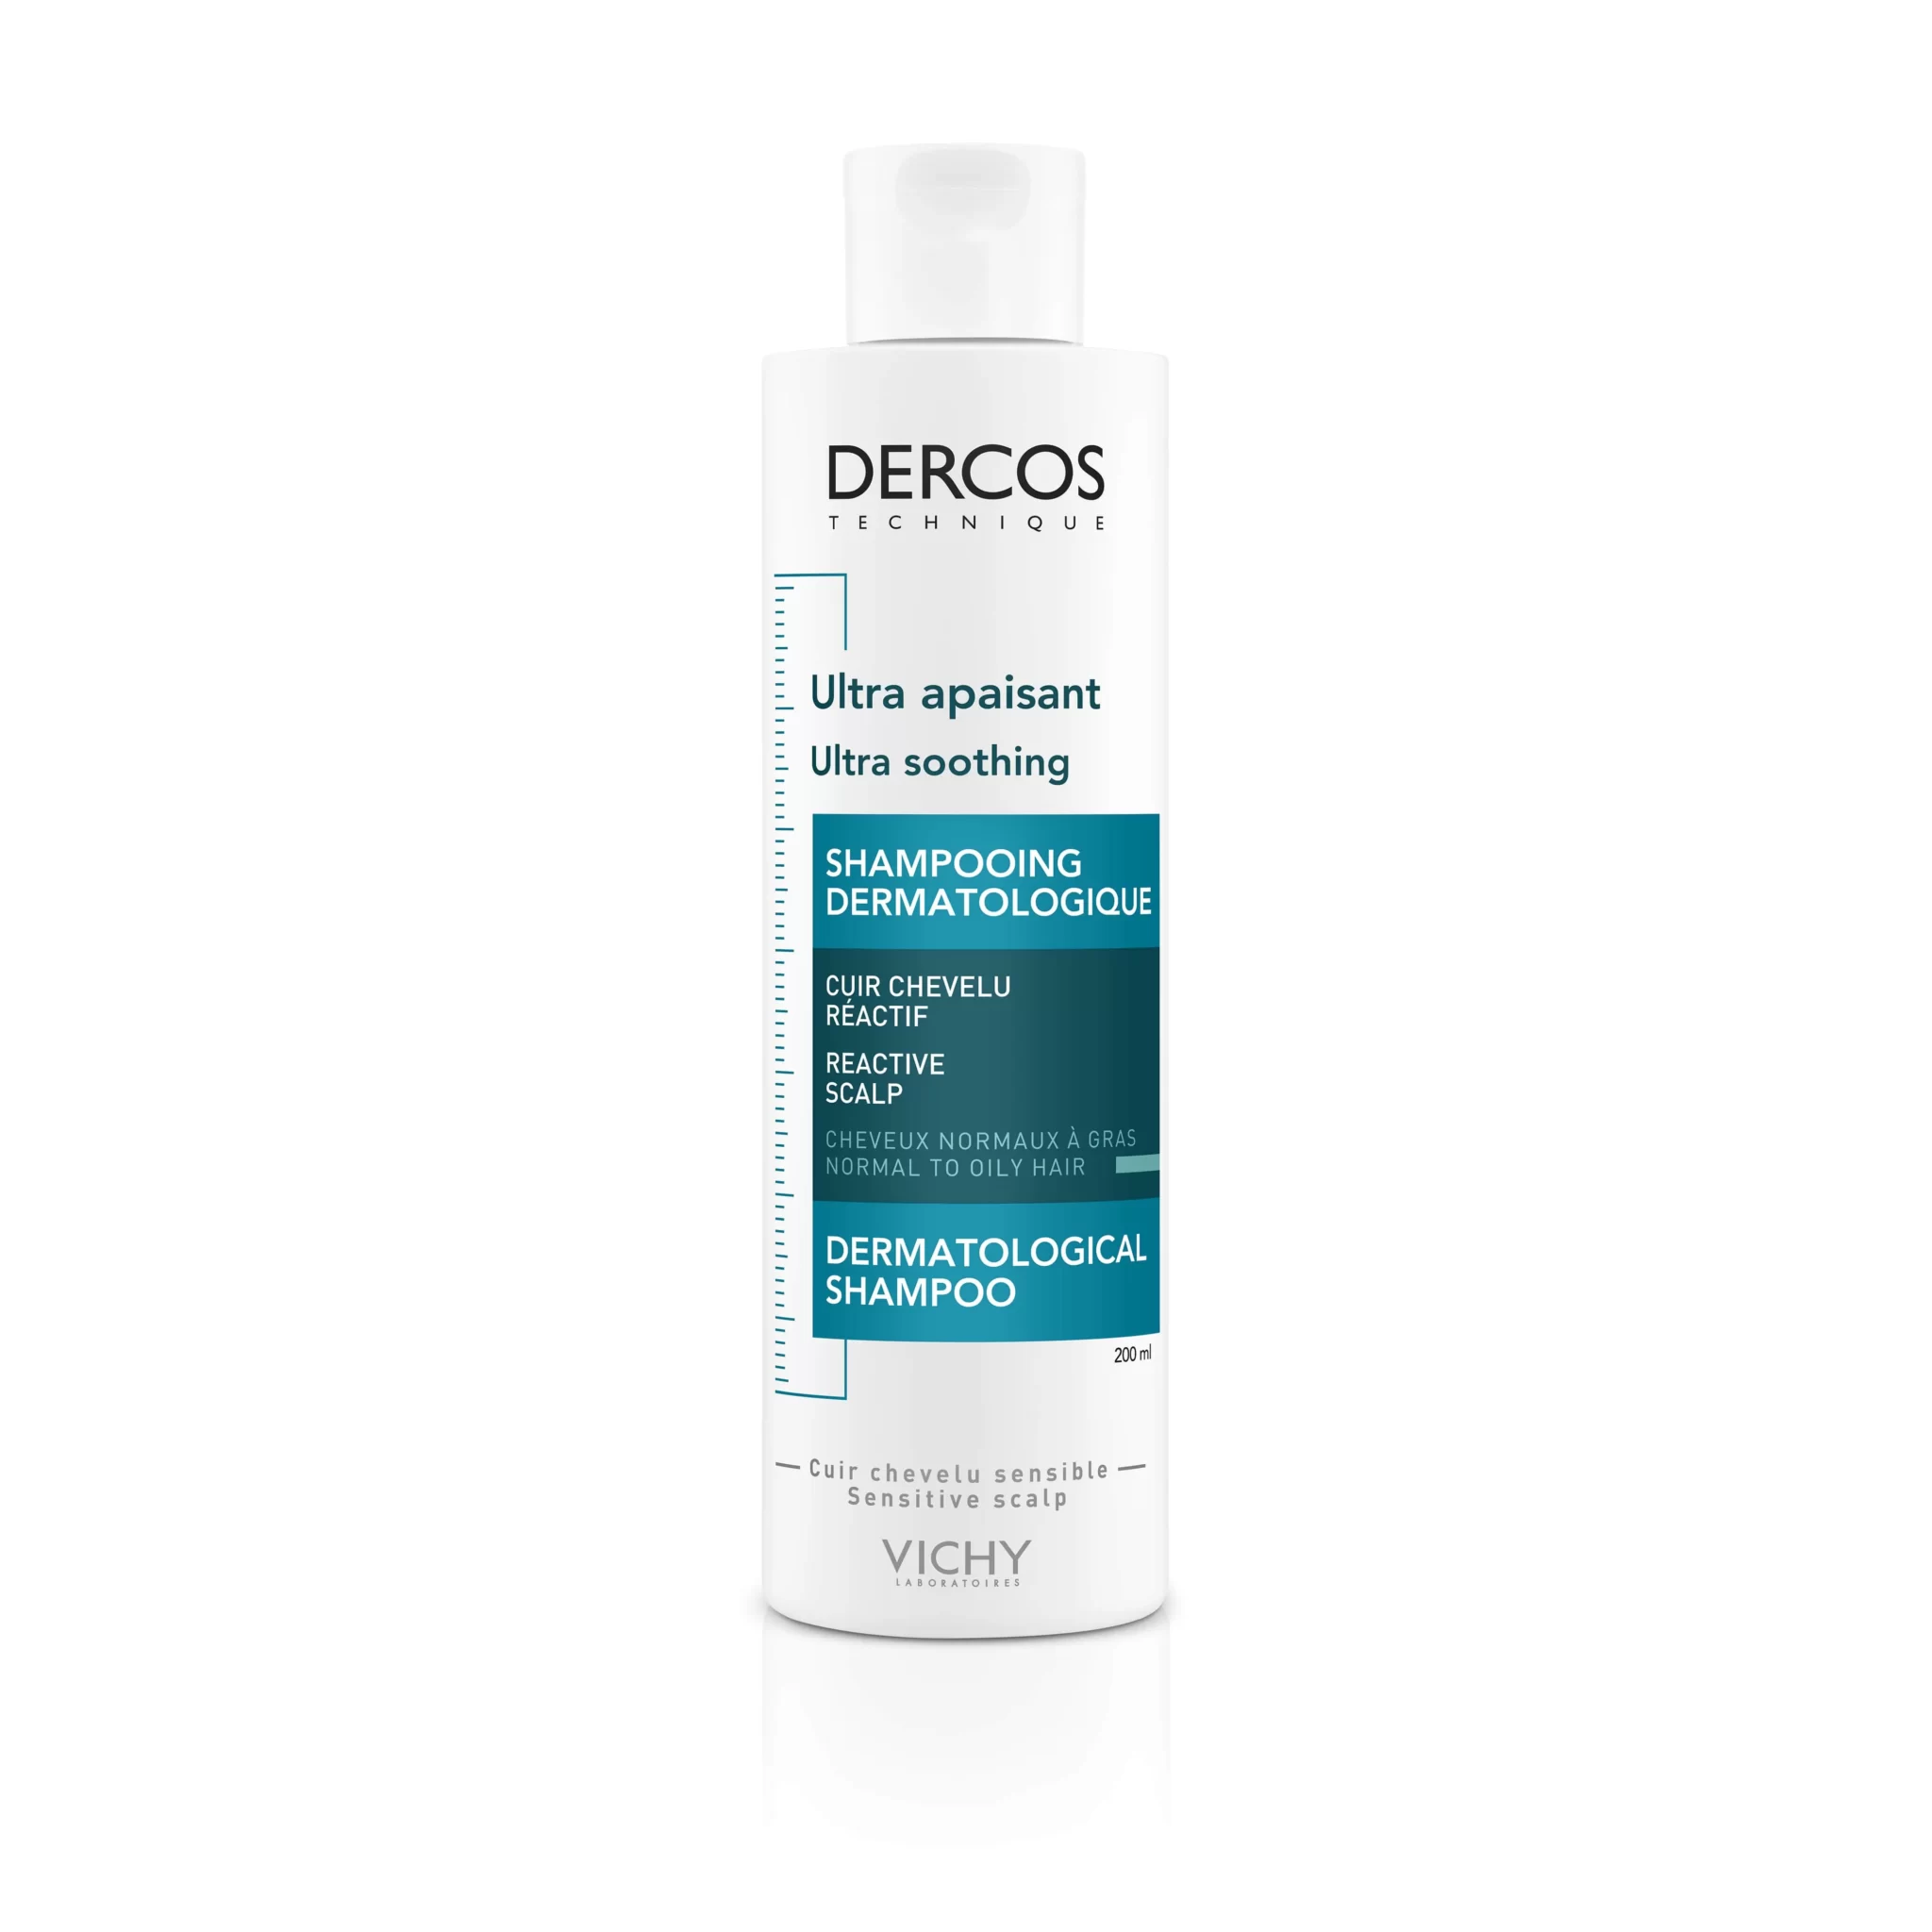 vichy-dercos-ultra-apaisant-shampooing-dermatologique-cheveux-normaux-gras-200-ml-3337875485128